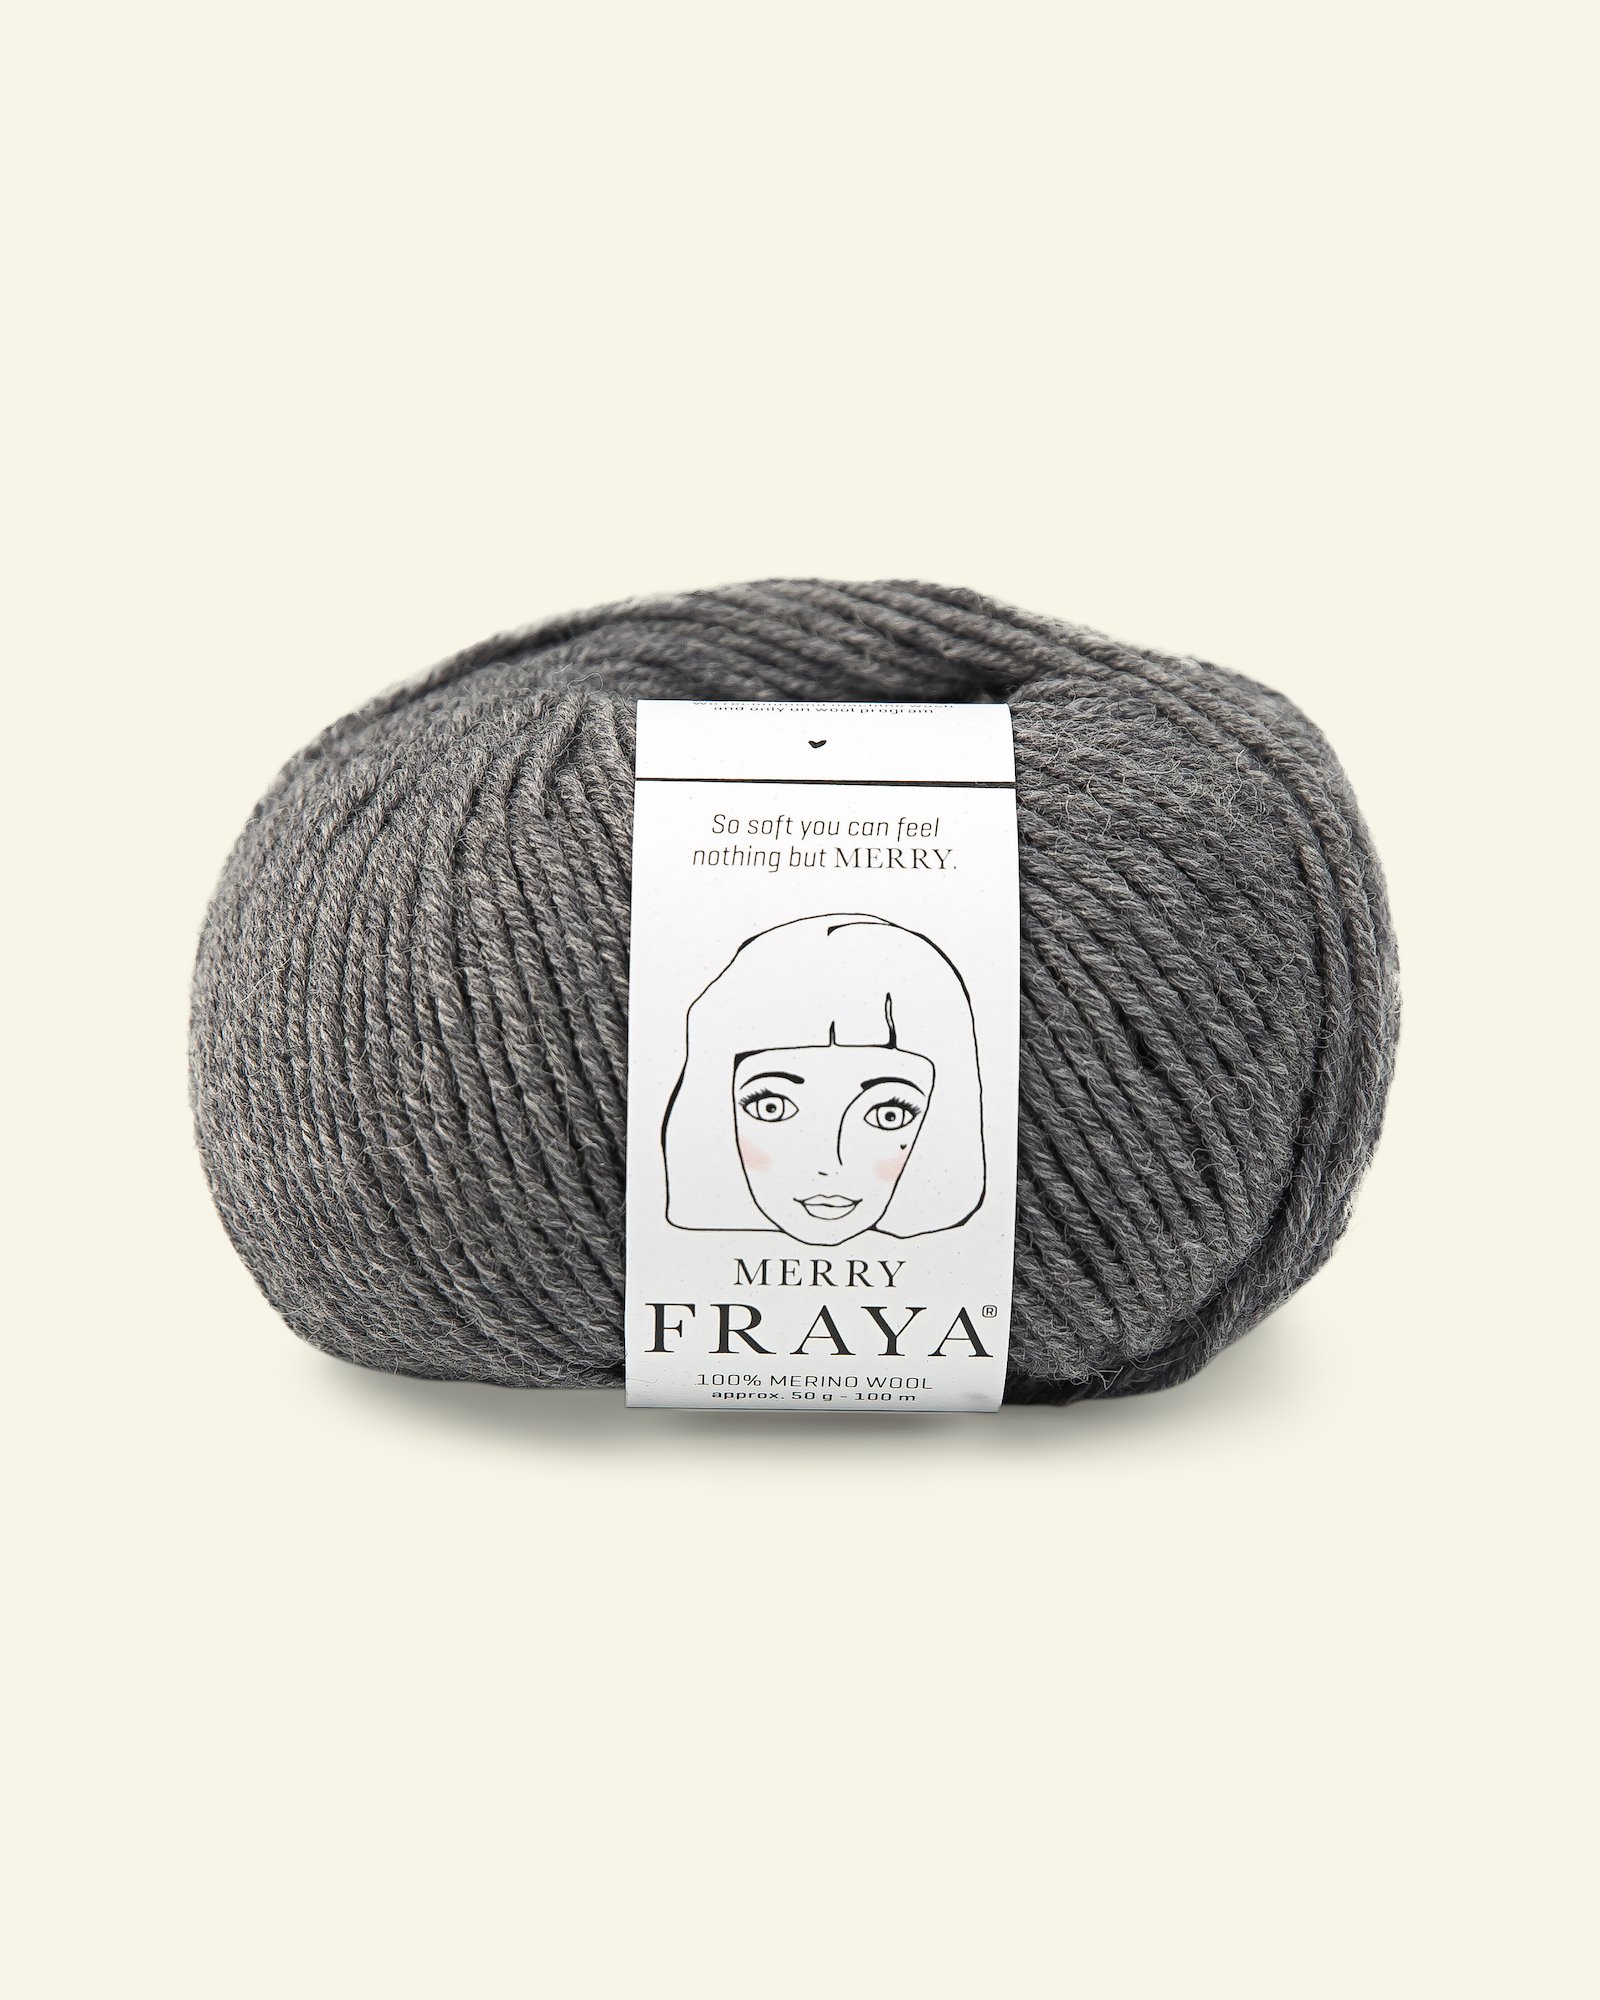 FRAYA, 100% Merino Wolle "Merry", Grau Meliert 90052841_pack